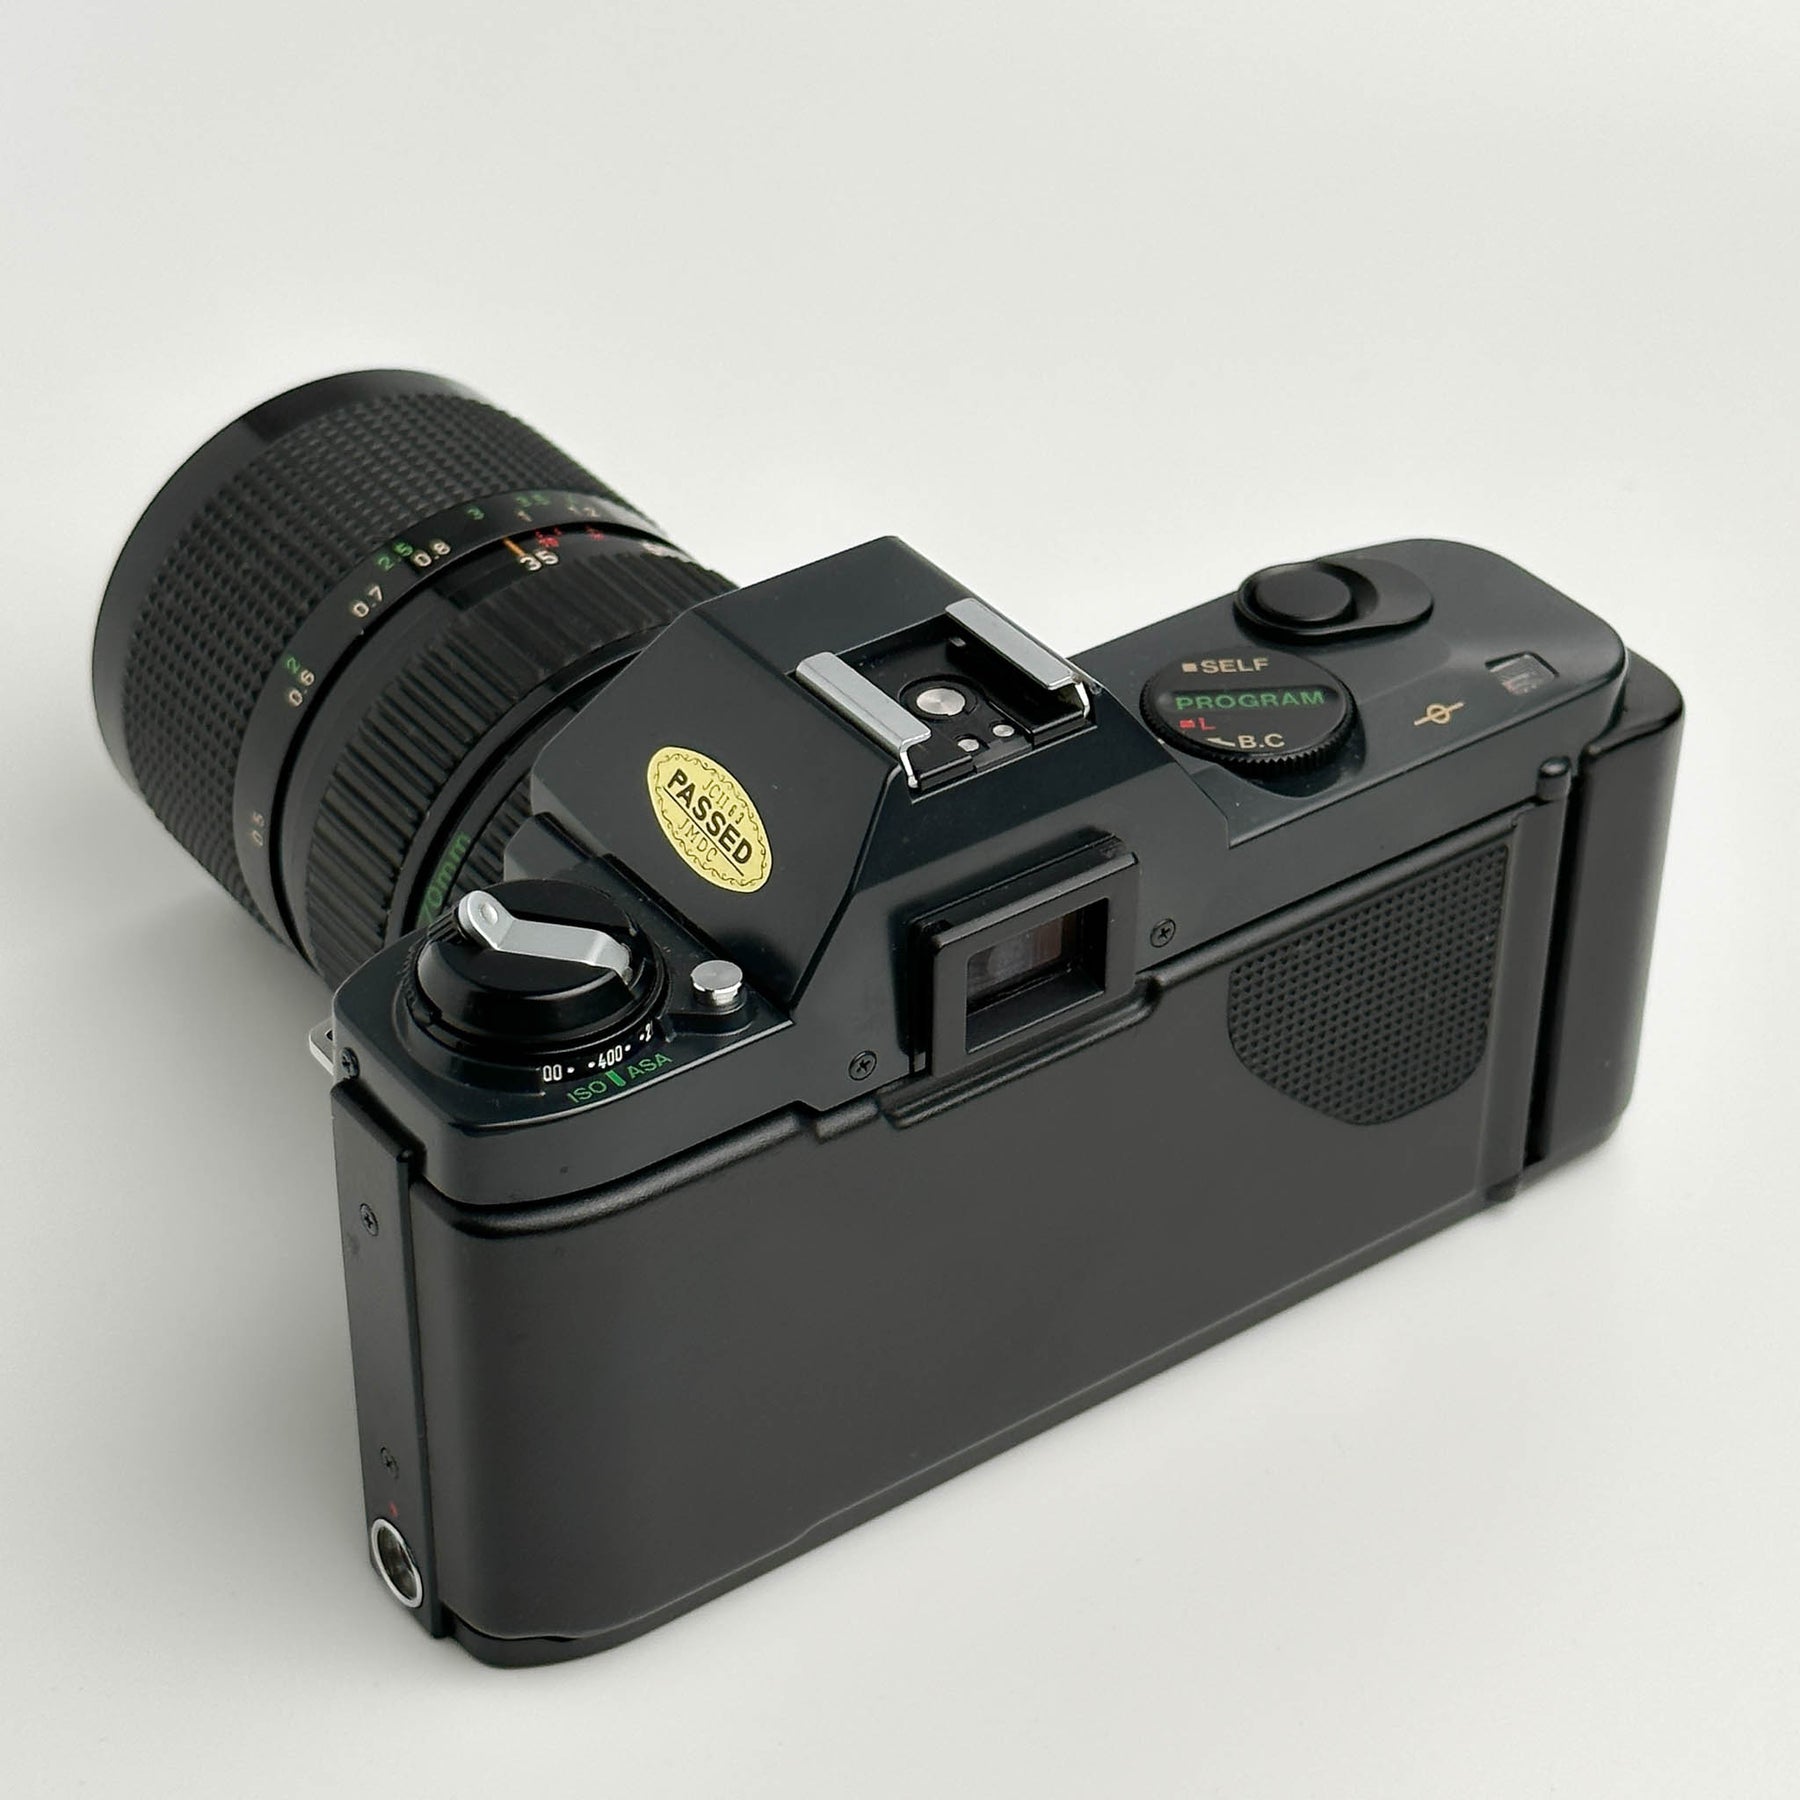 Analog Box N°30 - Canon T50 & FD 35-70mm f/4